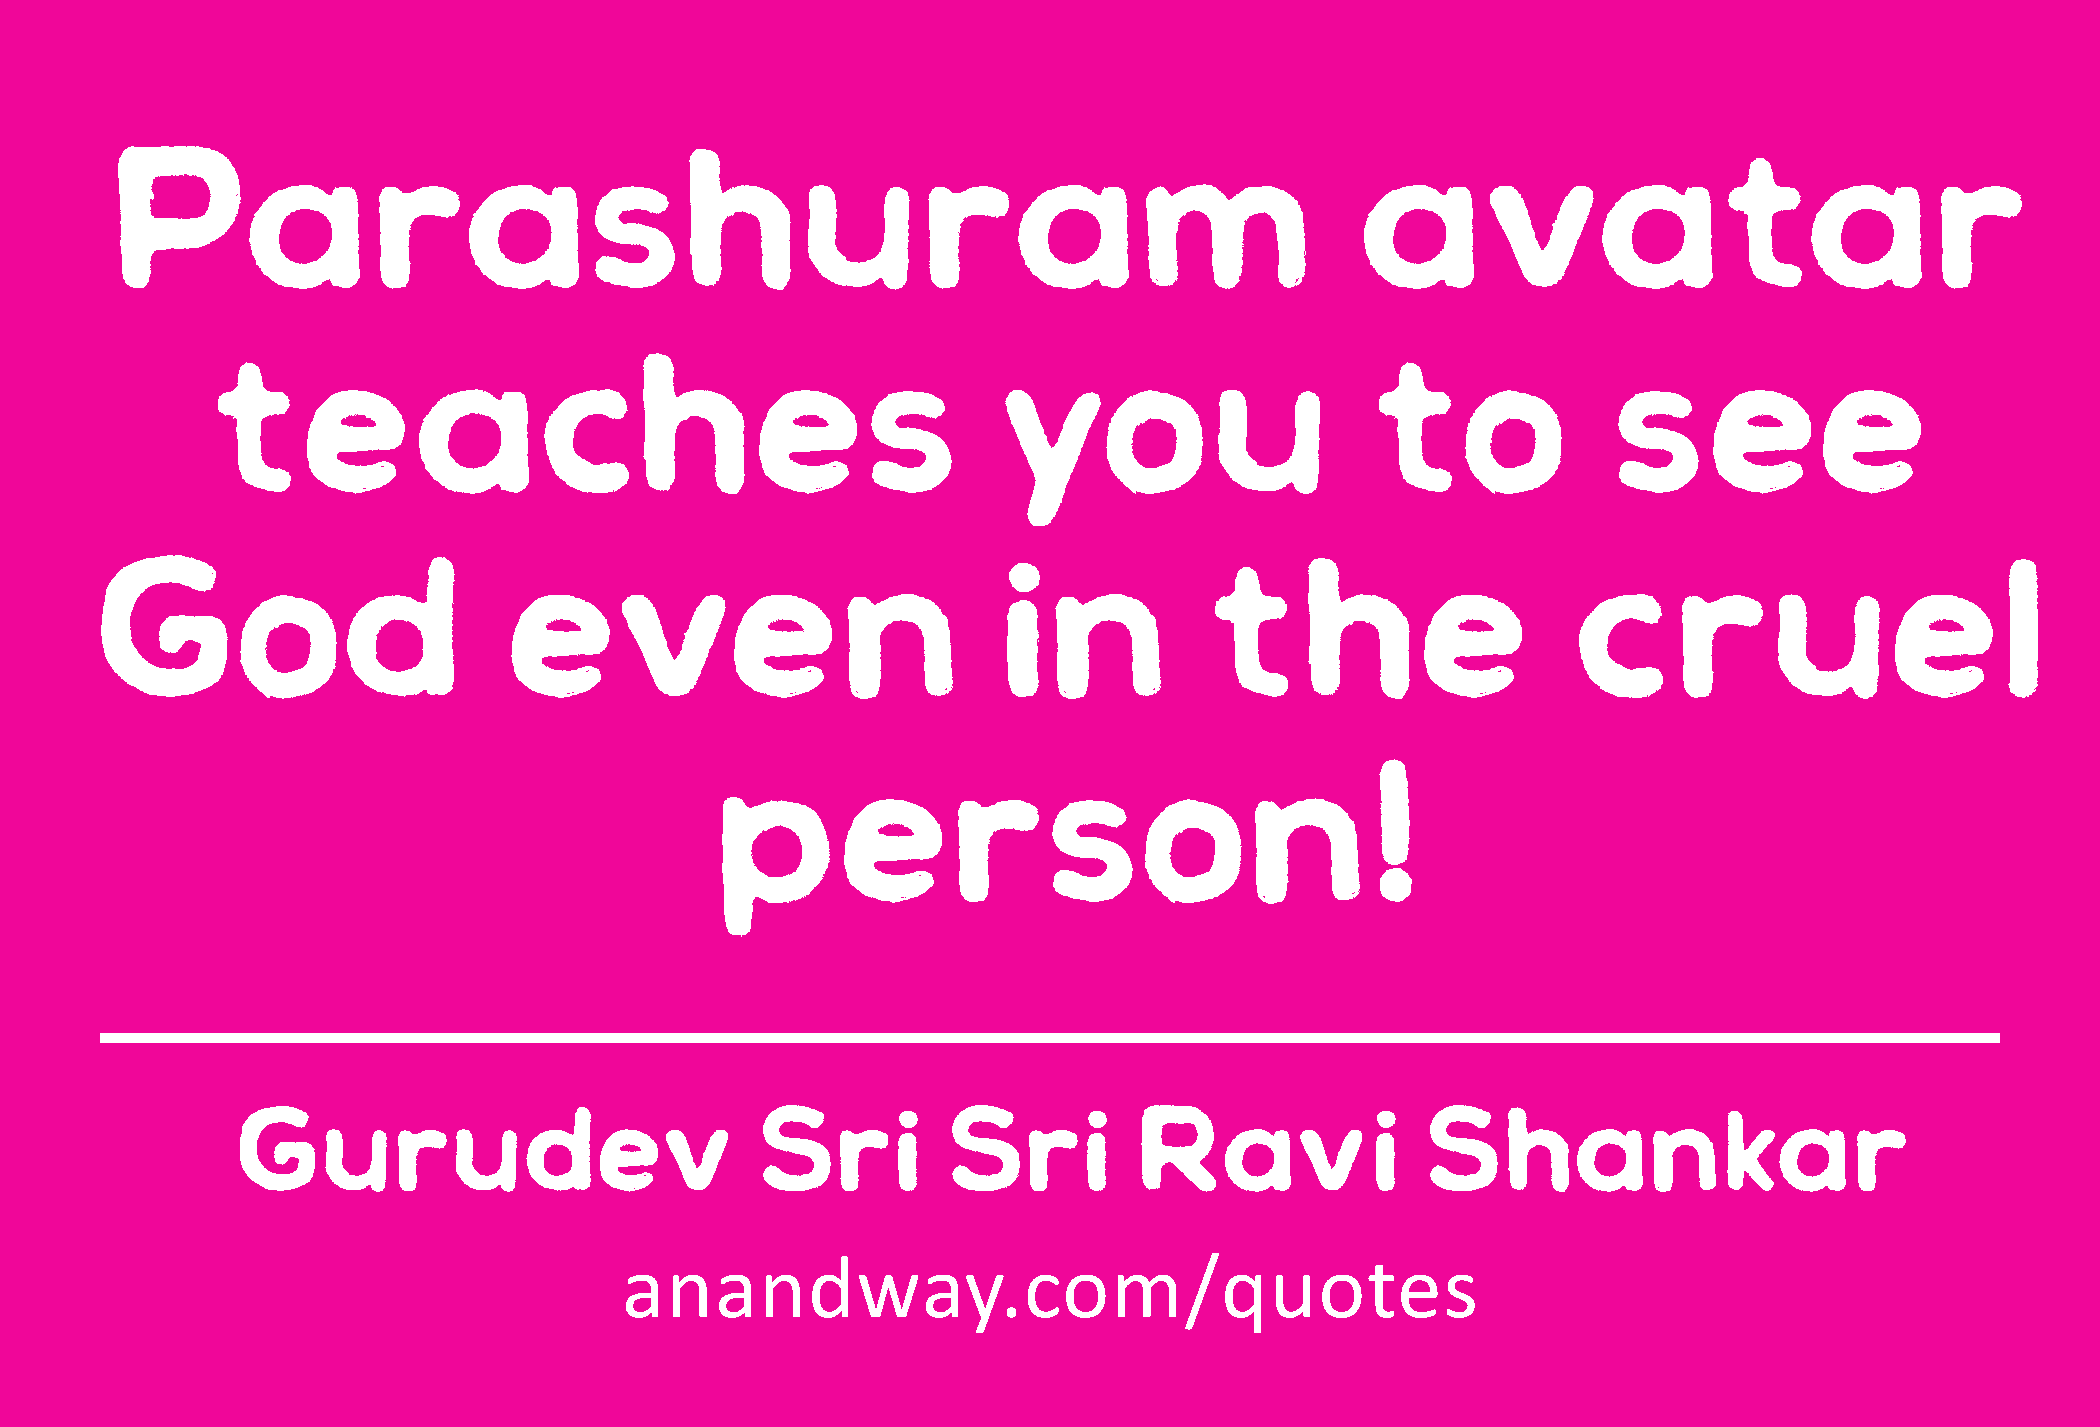 Parashuram avatar teaches you to see God even in the cruel person! 
 -Gurudev Sri Sri Ravi Shankar